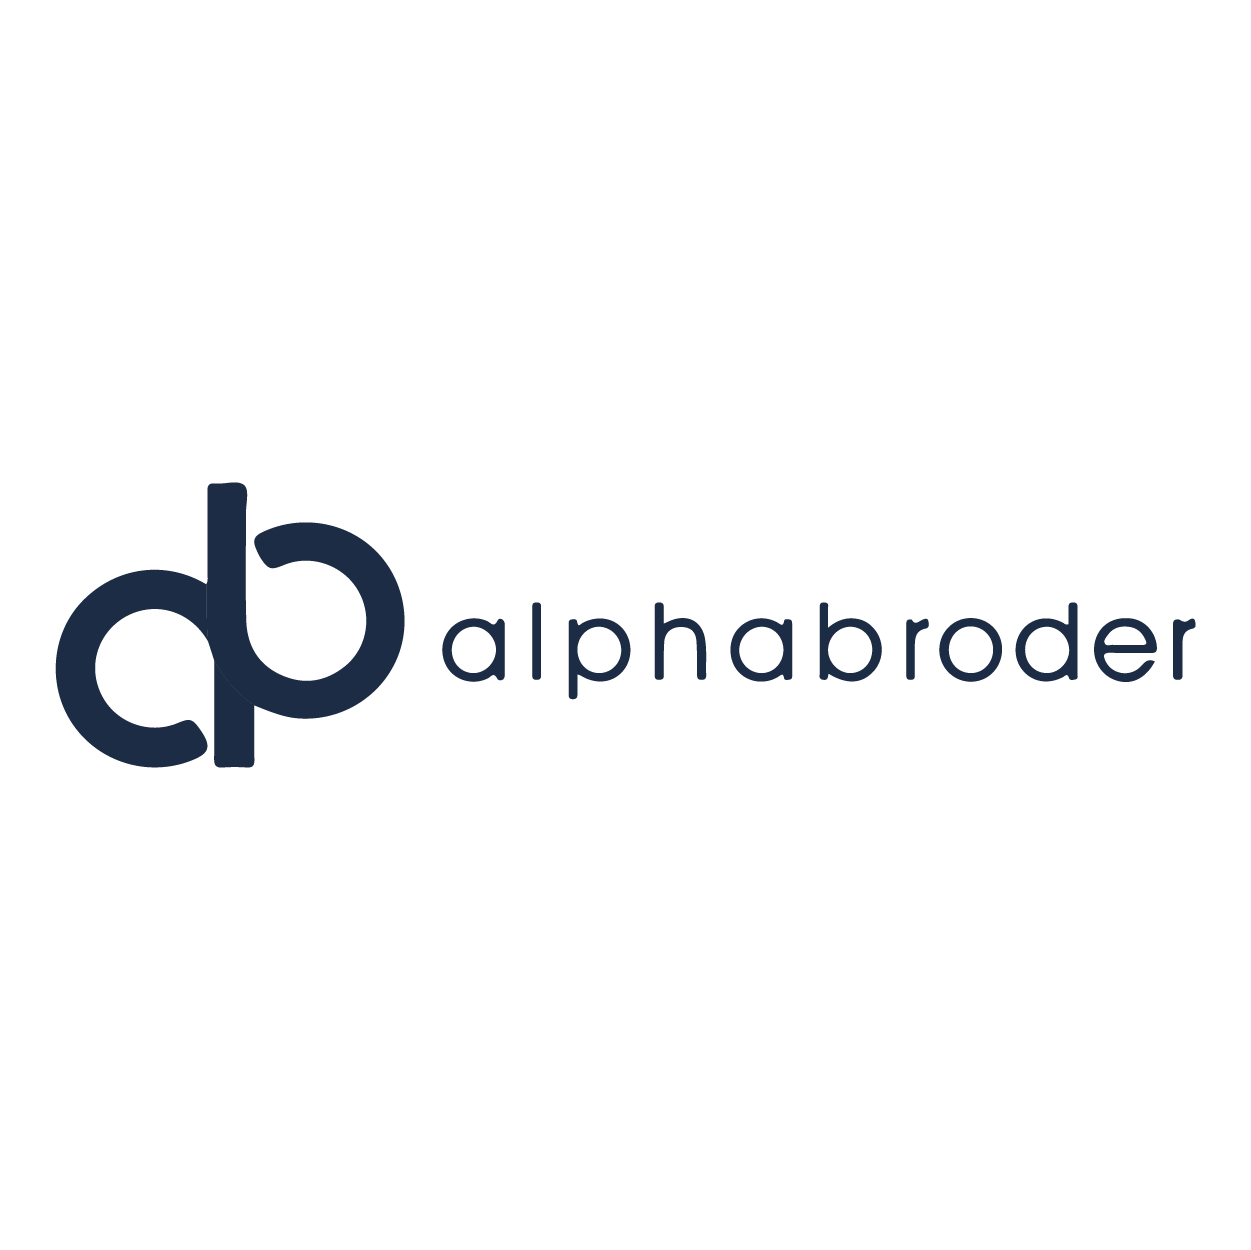 Alphabroder Logo